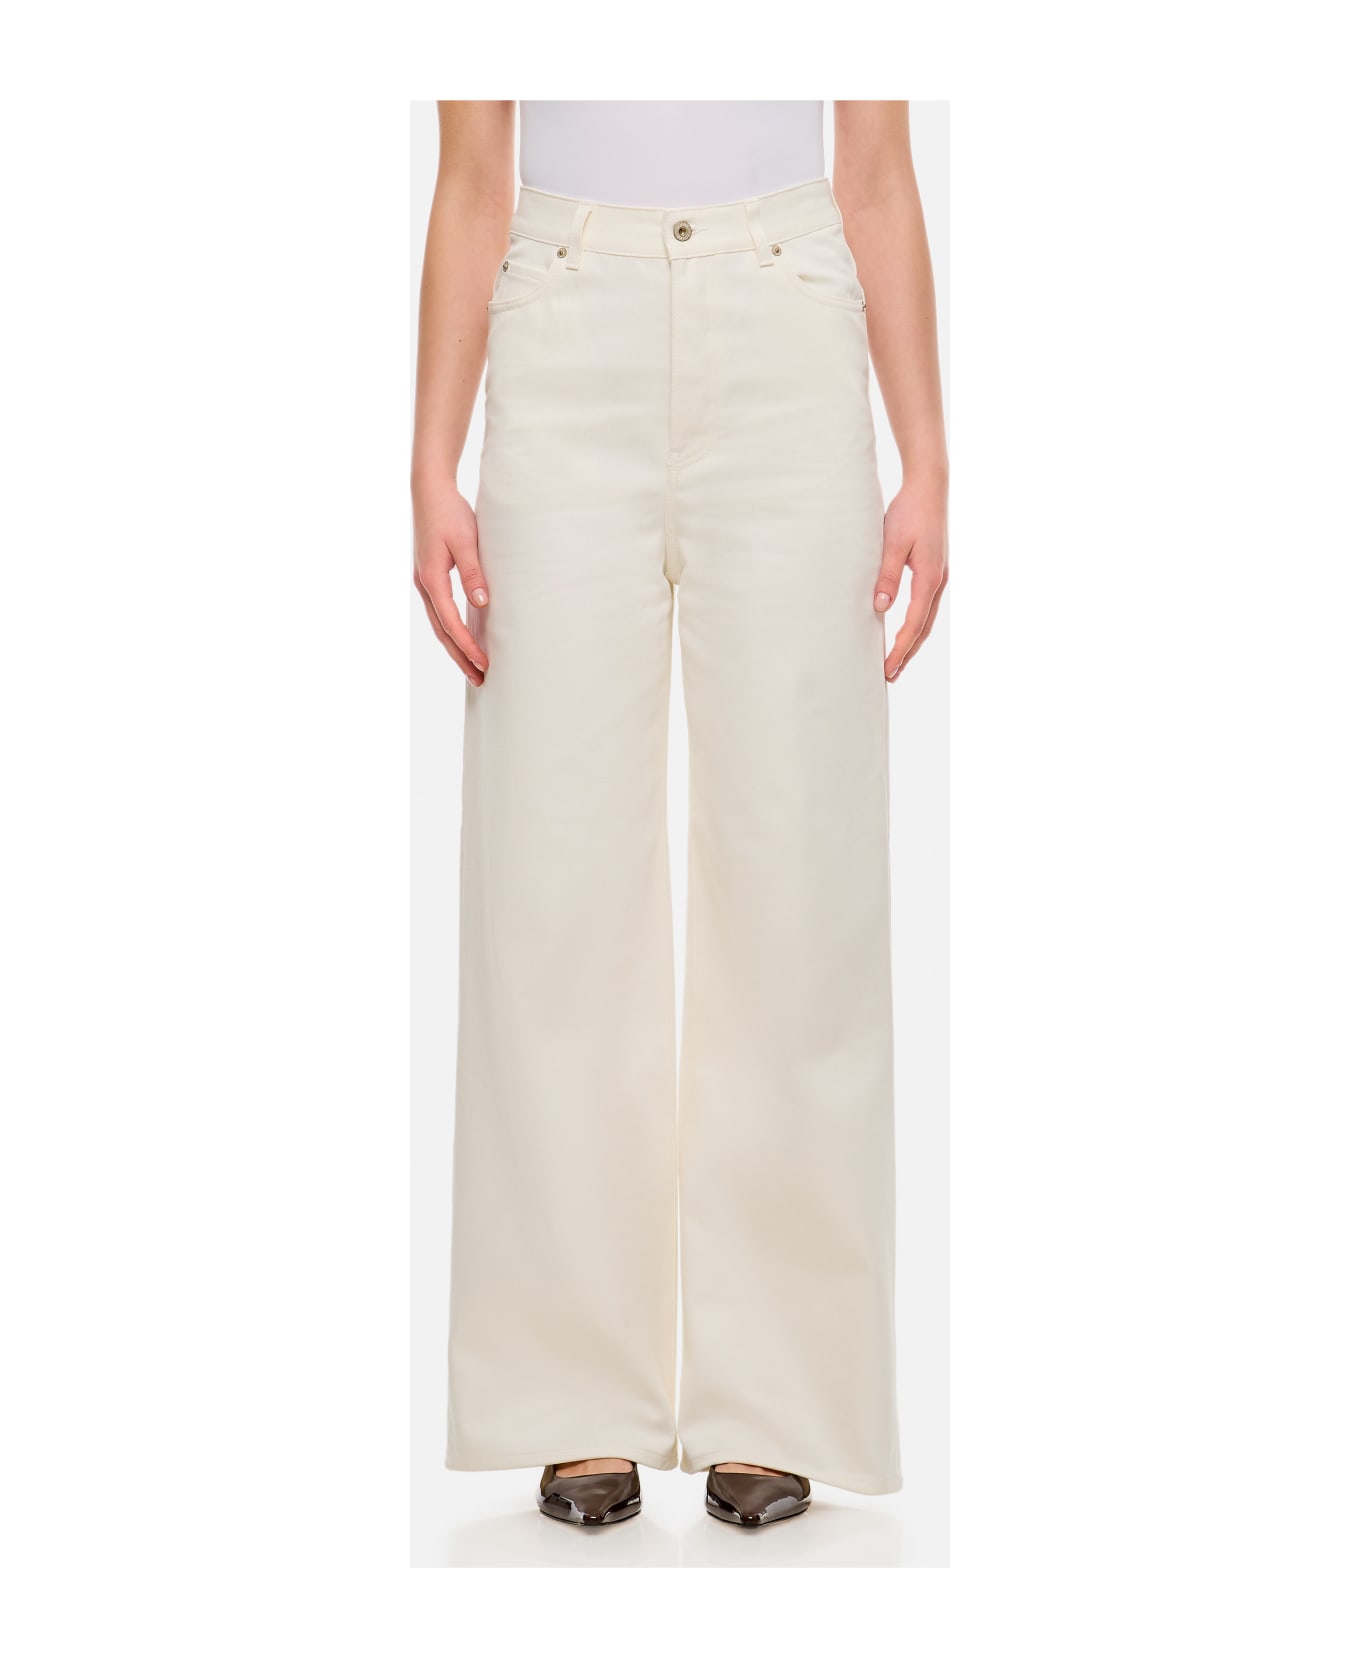 Loewe High Waisted Jeans - White